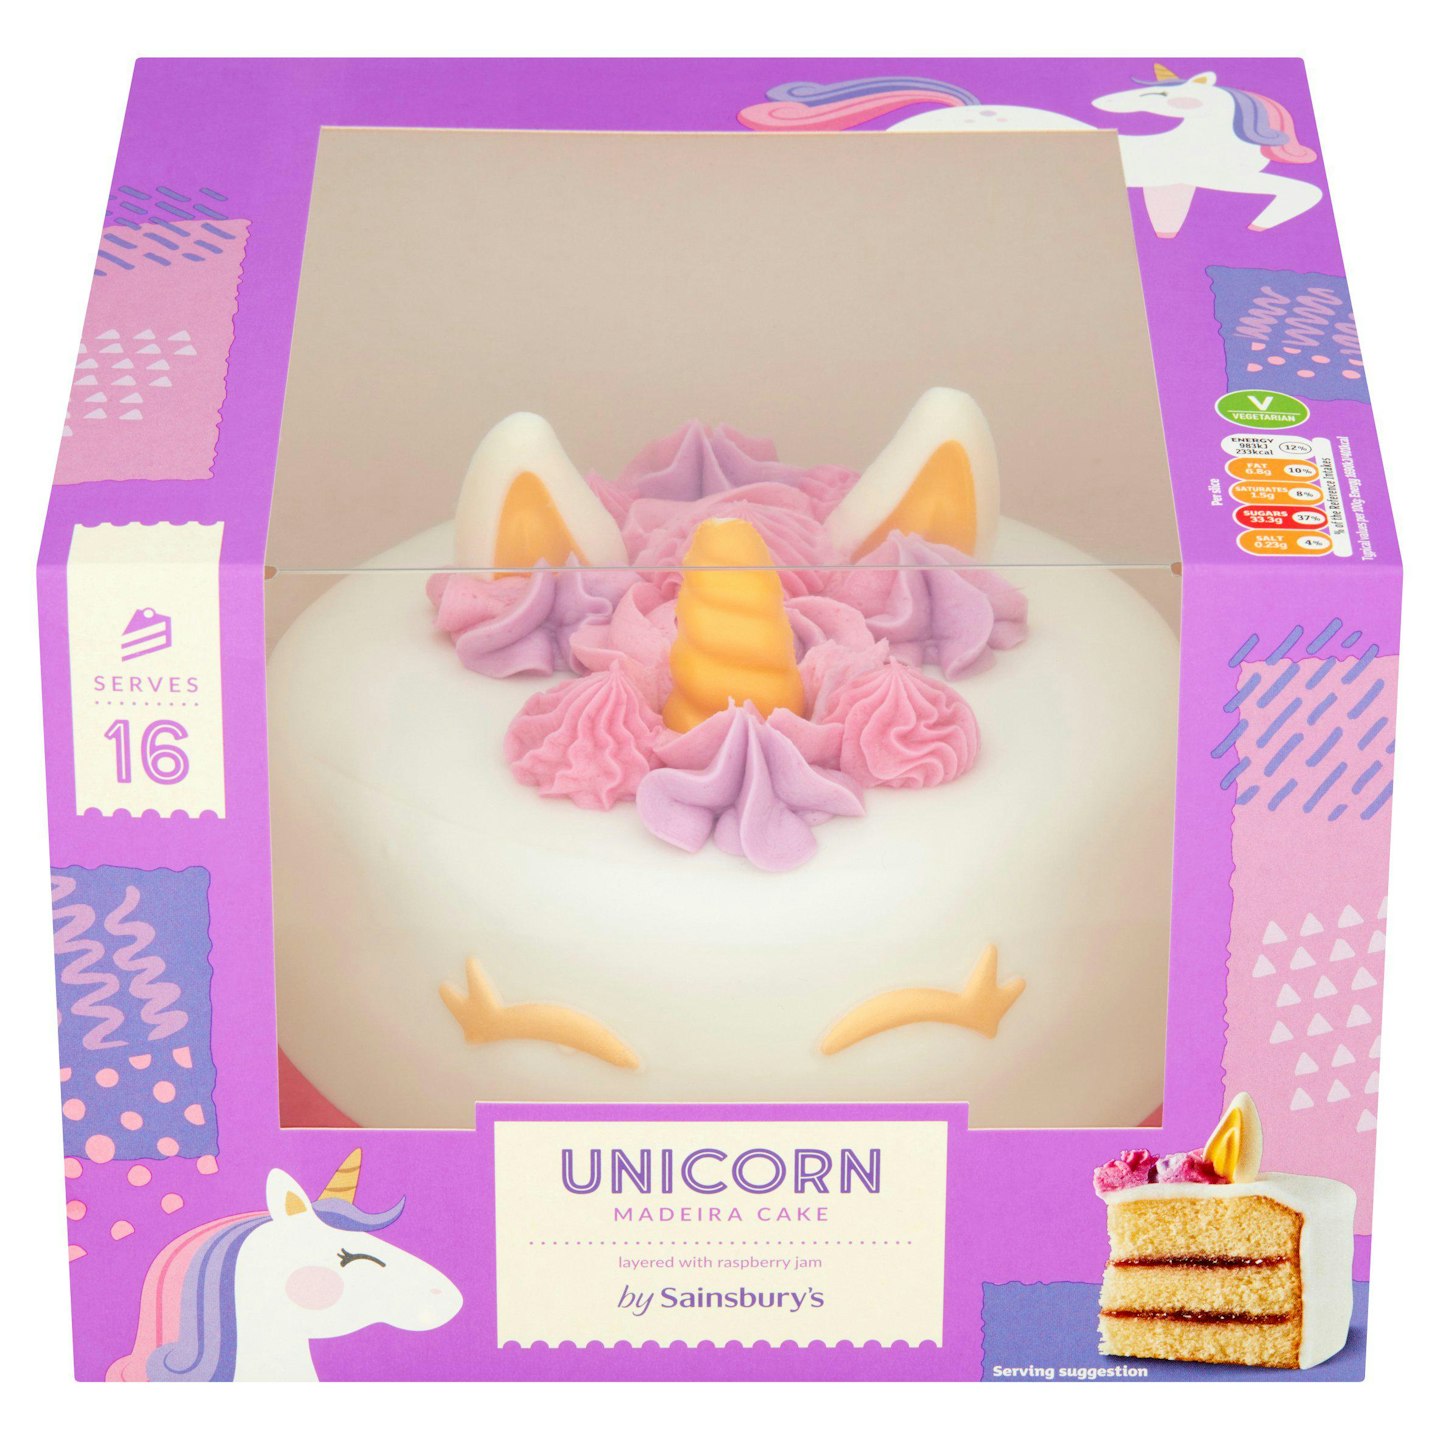 The best supermarket birthday cakes: Unicorn Cake